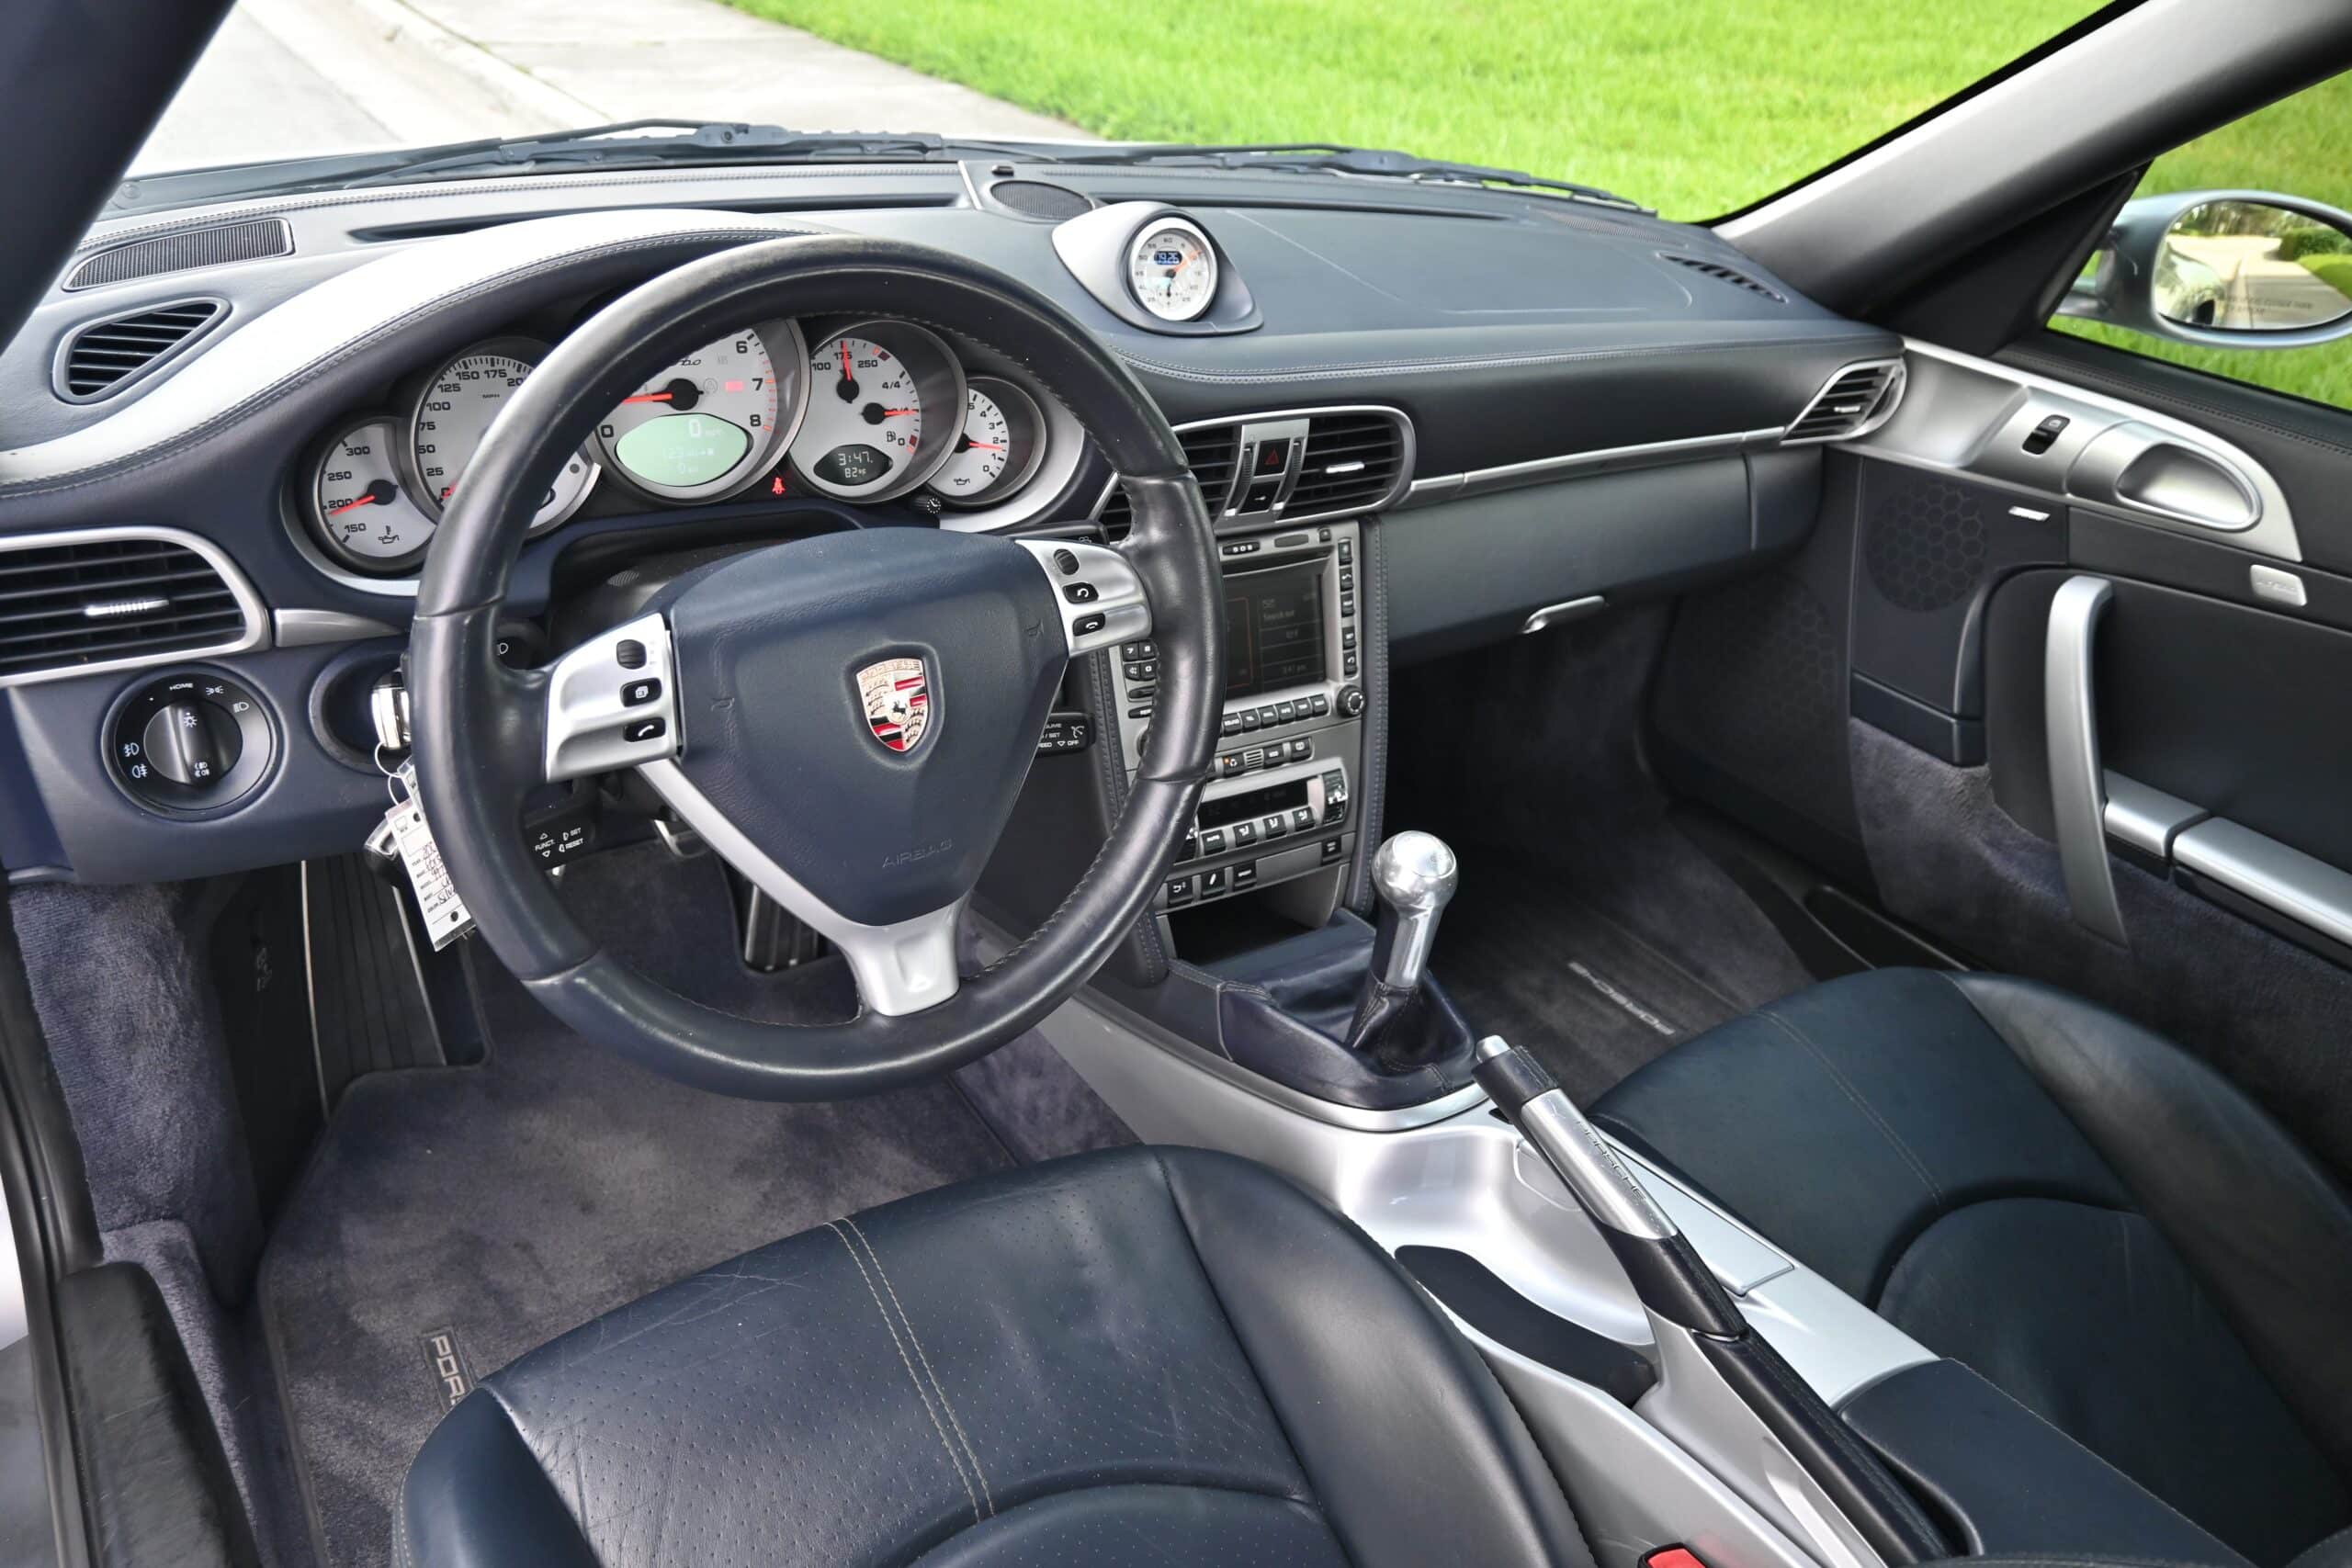 2007 Porsche 911 Turbo 997.1 6 Speed Manual-Sport Seats-Original Window Sticker-Full Service History-Stock